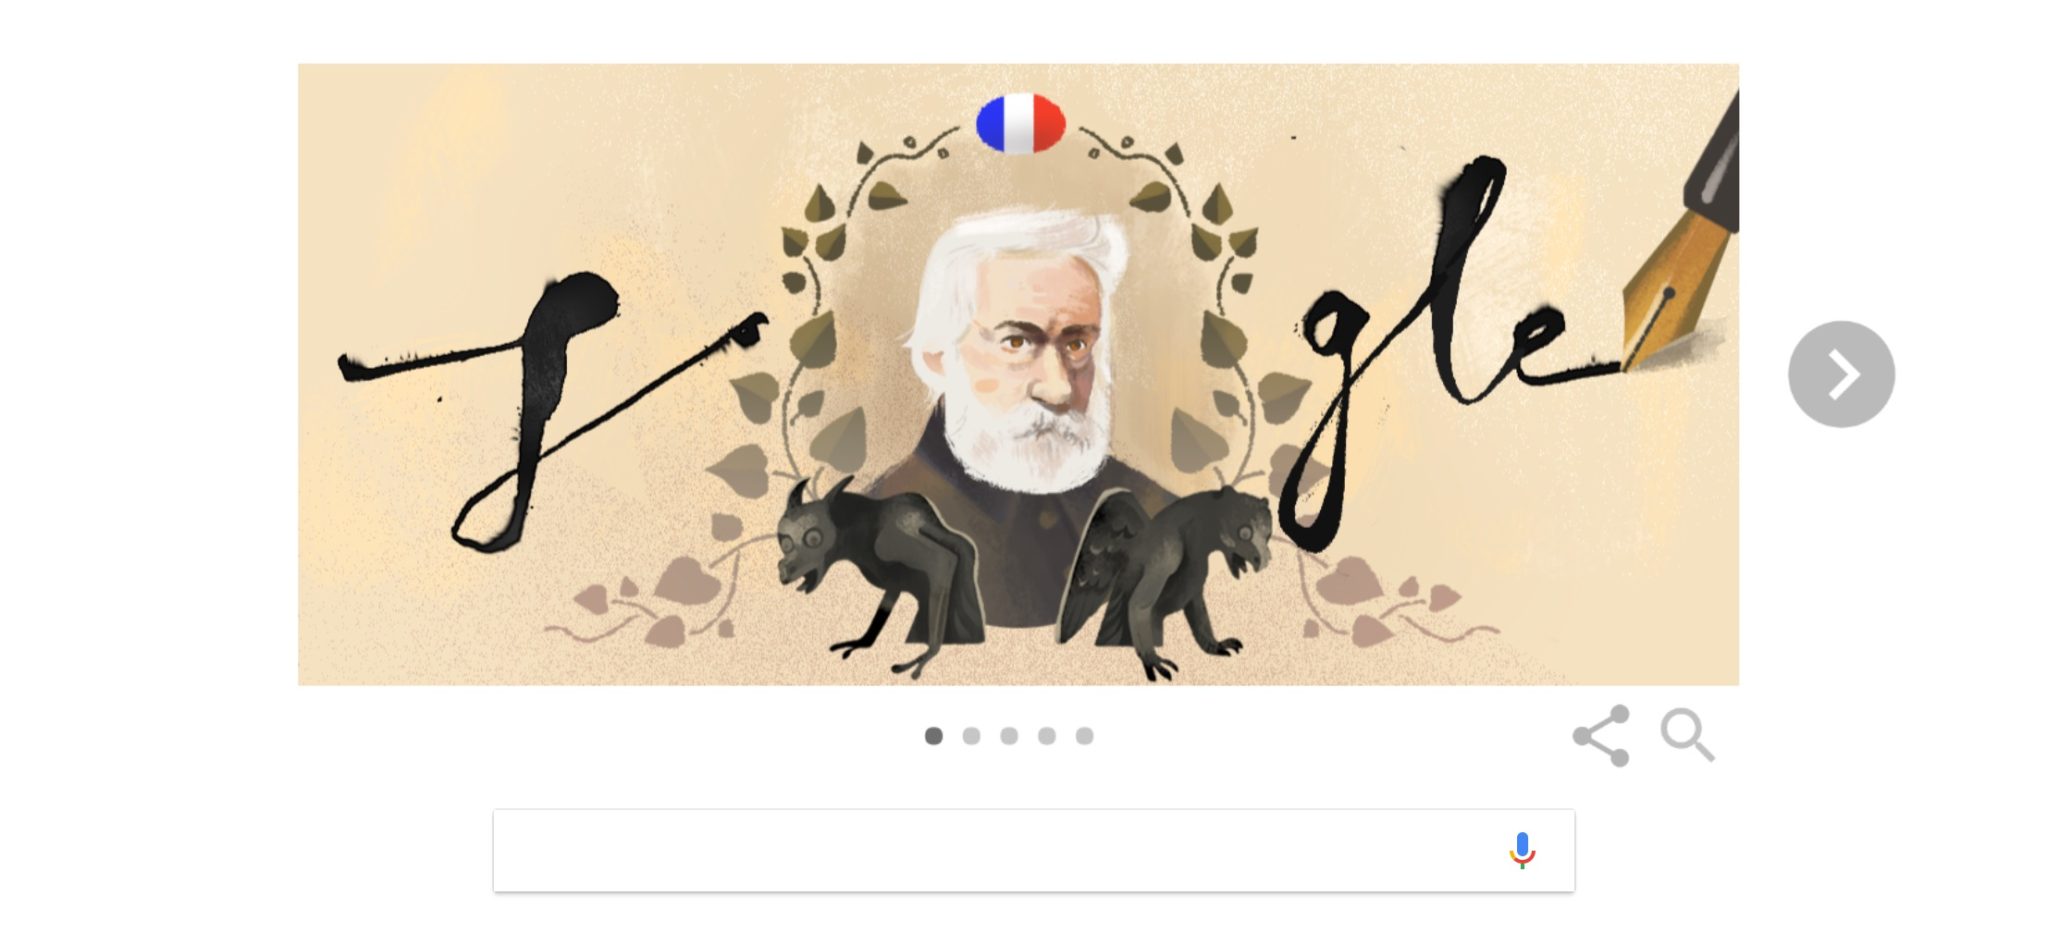 google rend hommage victor hugo doodle 1